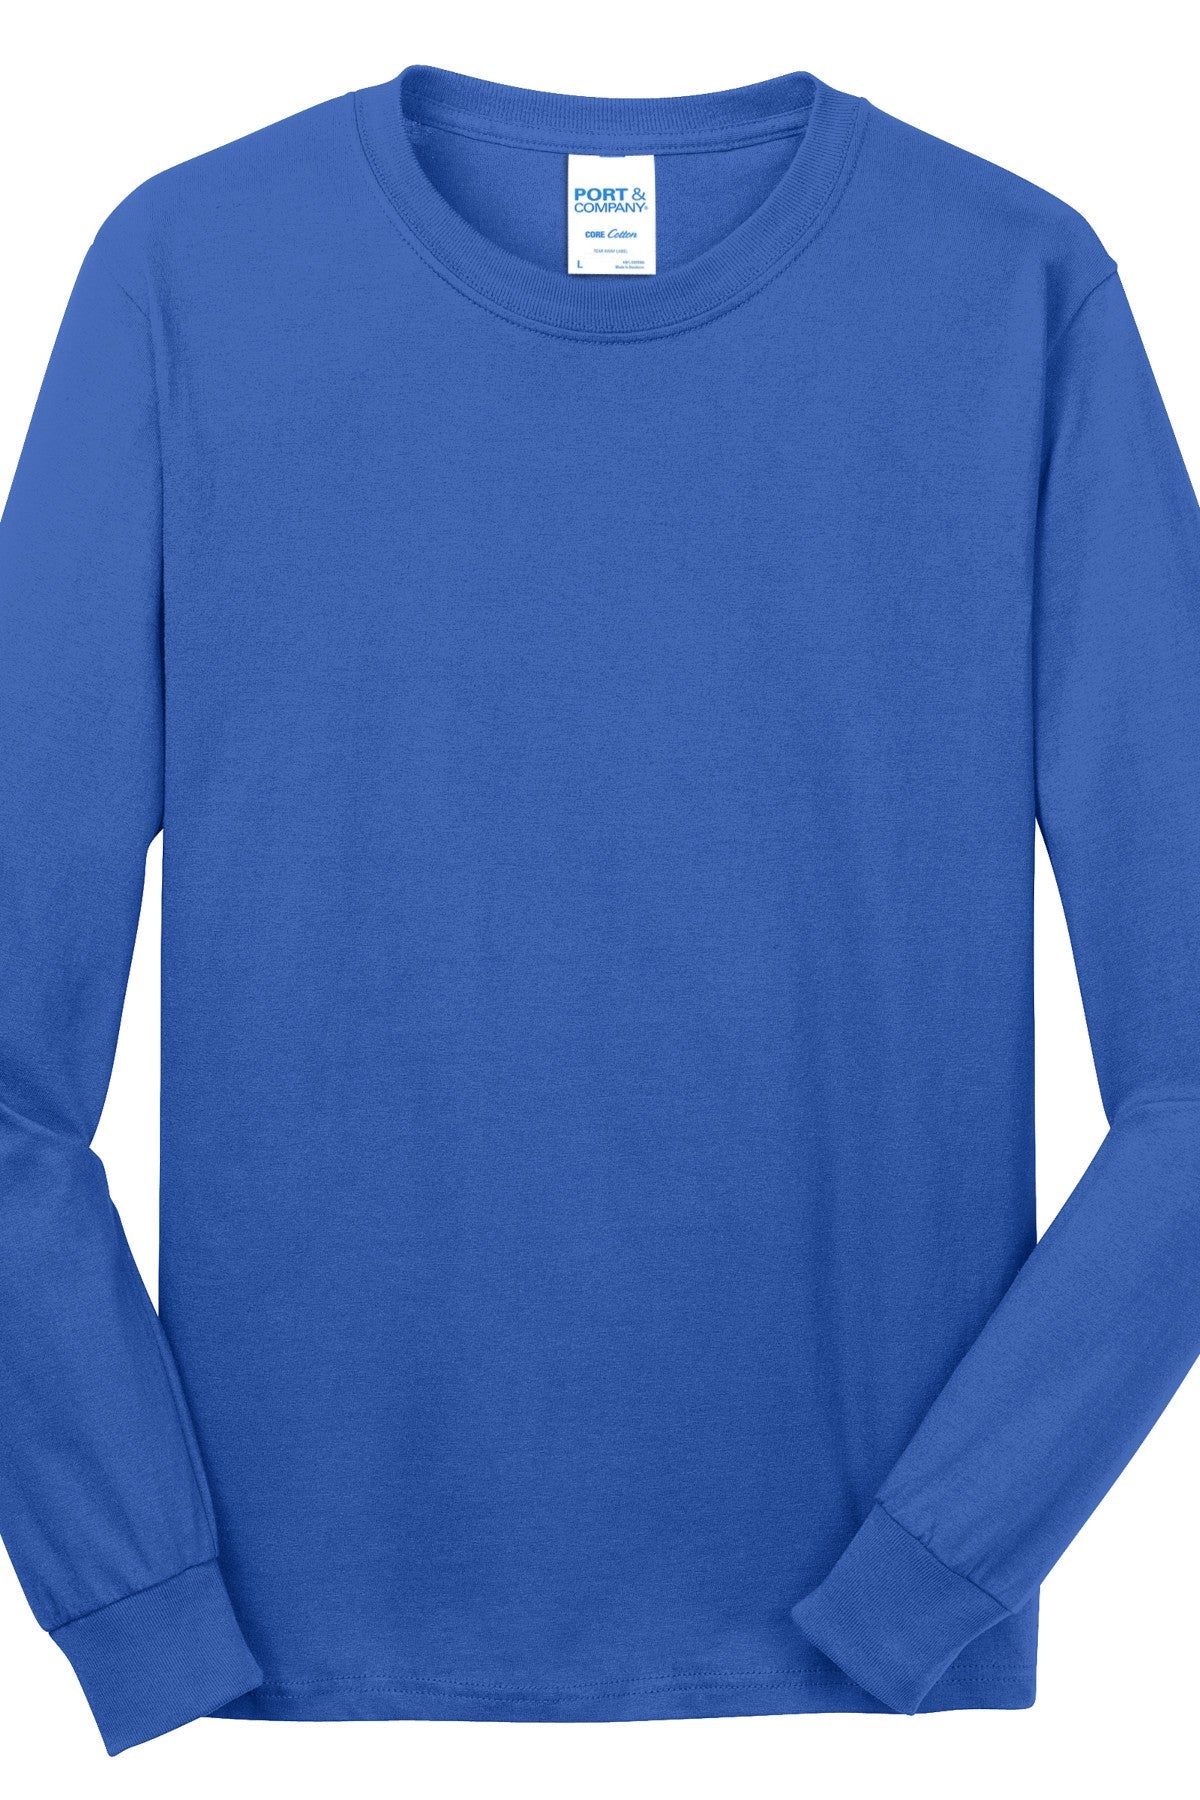 Port & Company® Pc54Ls Long Sleeve Cotton T-Shirt Ad Small / Royal